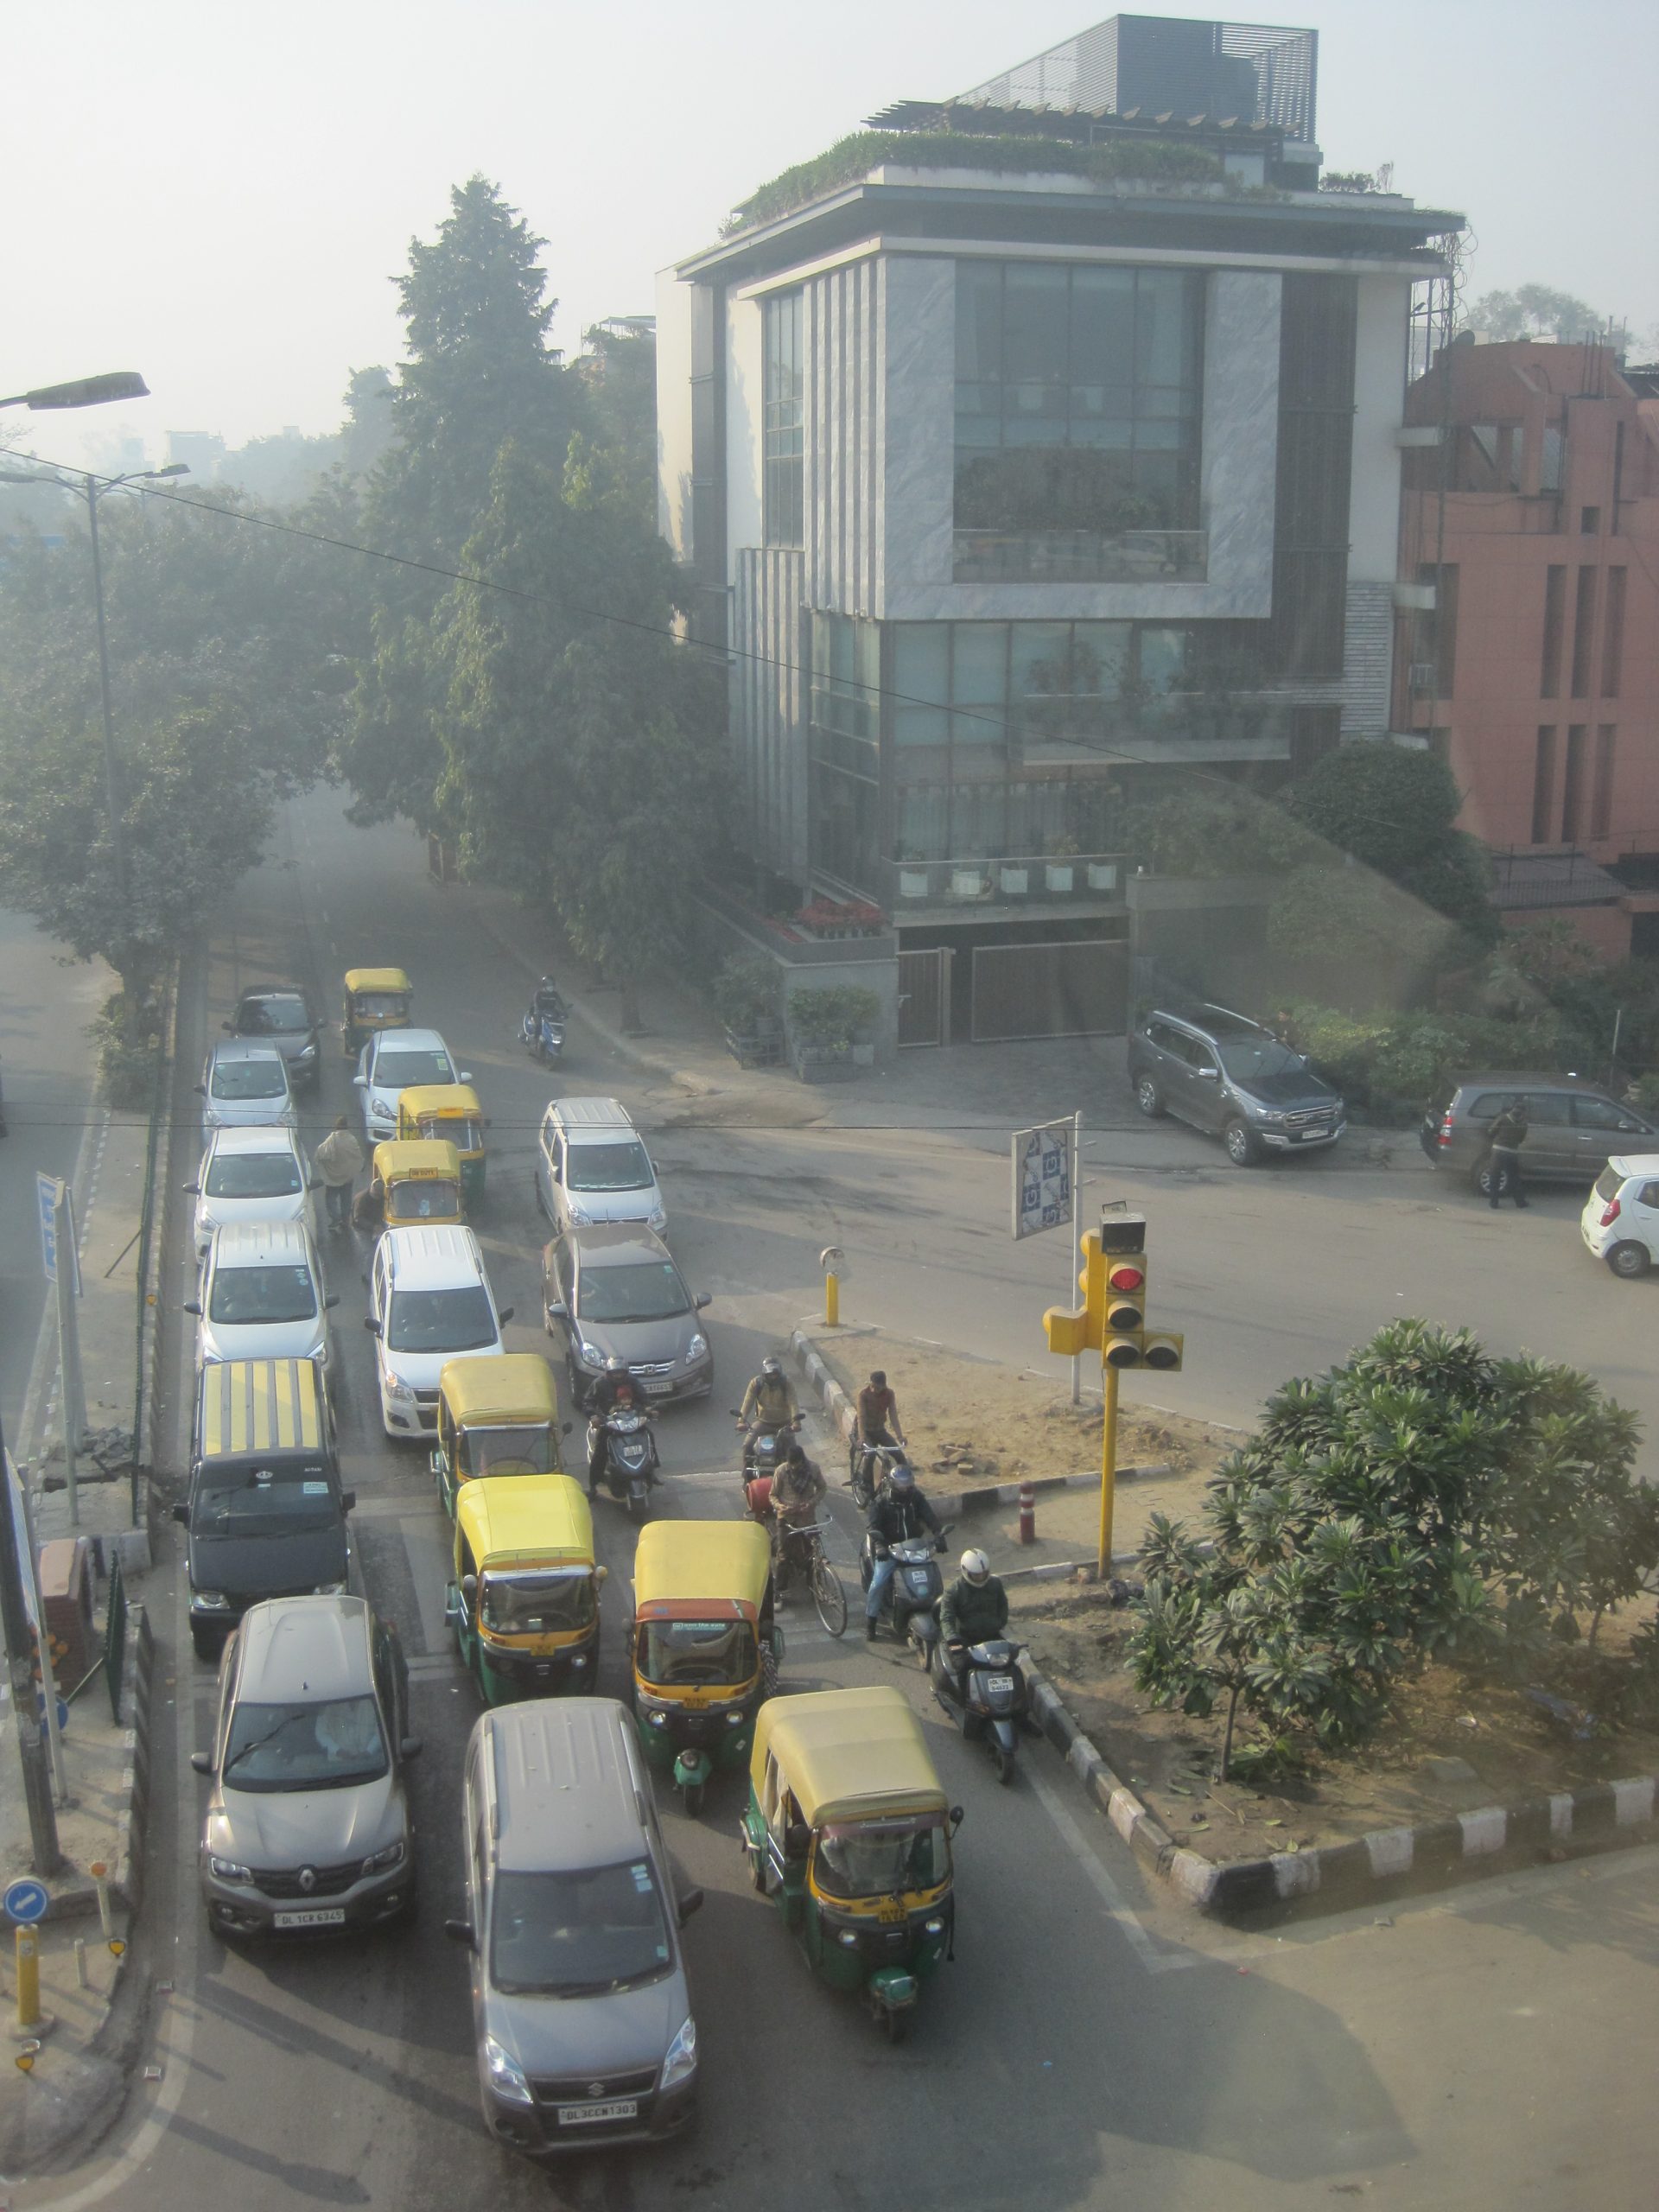 Driving through Delhi - photo by Juliamaud